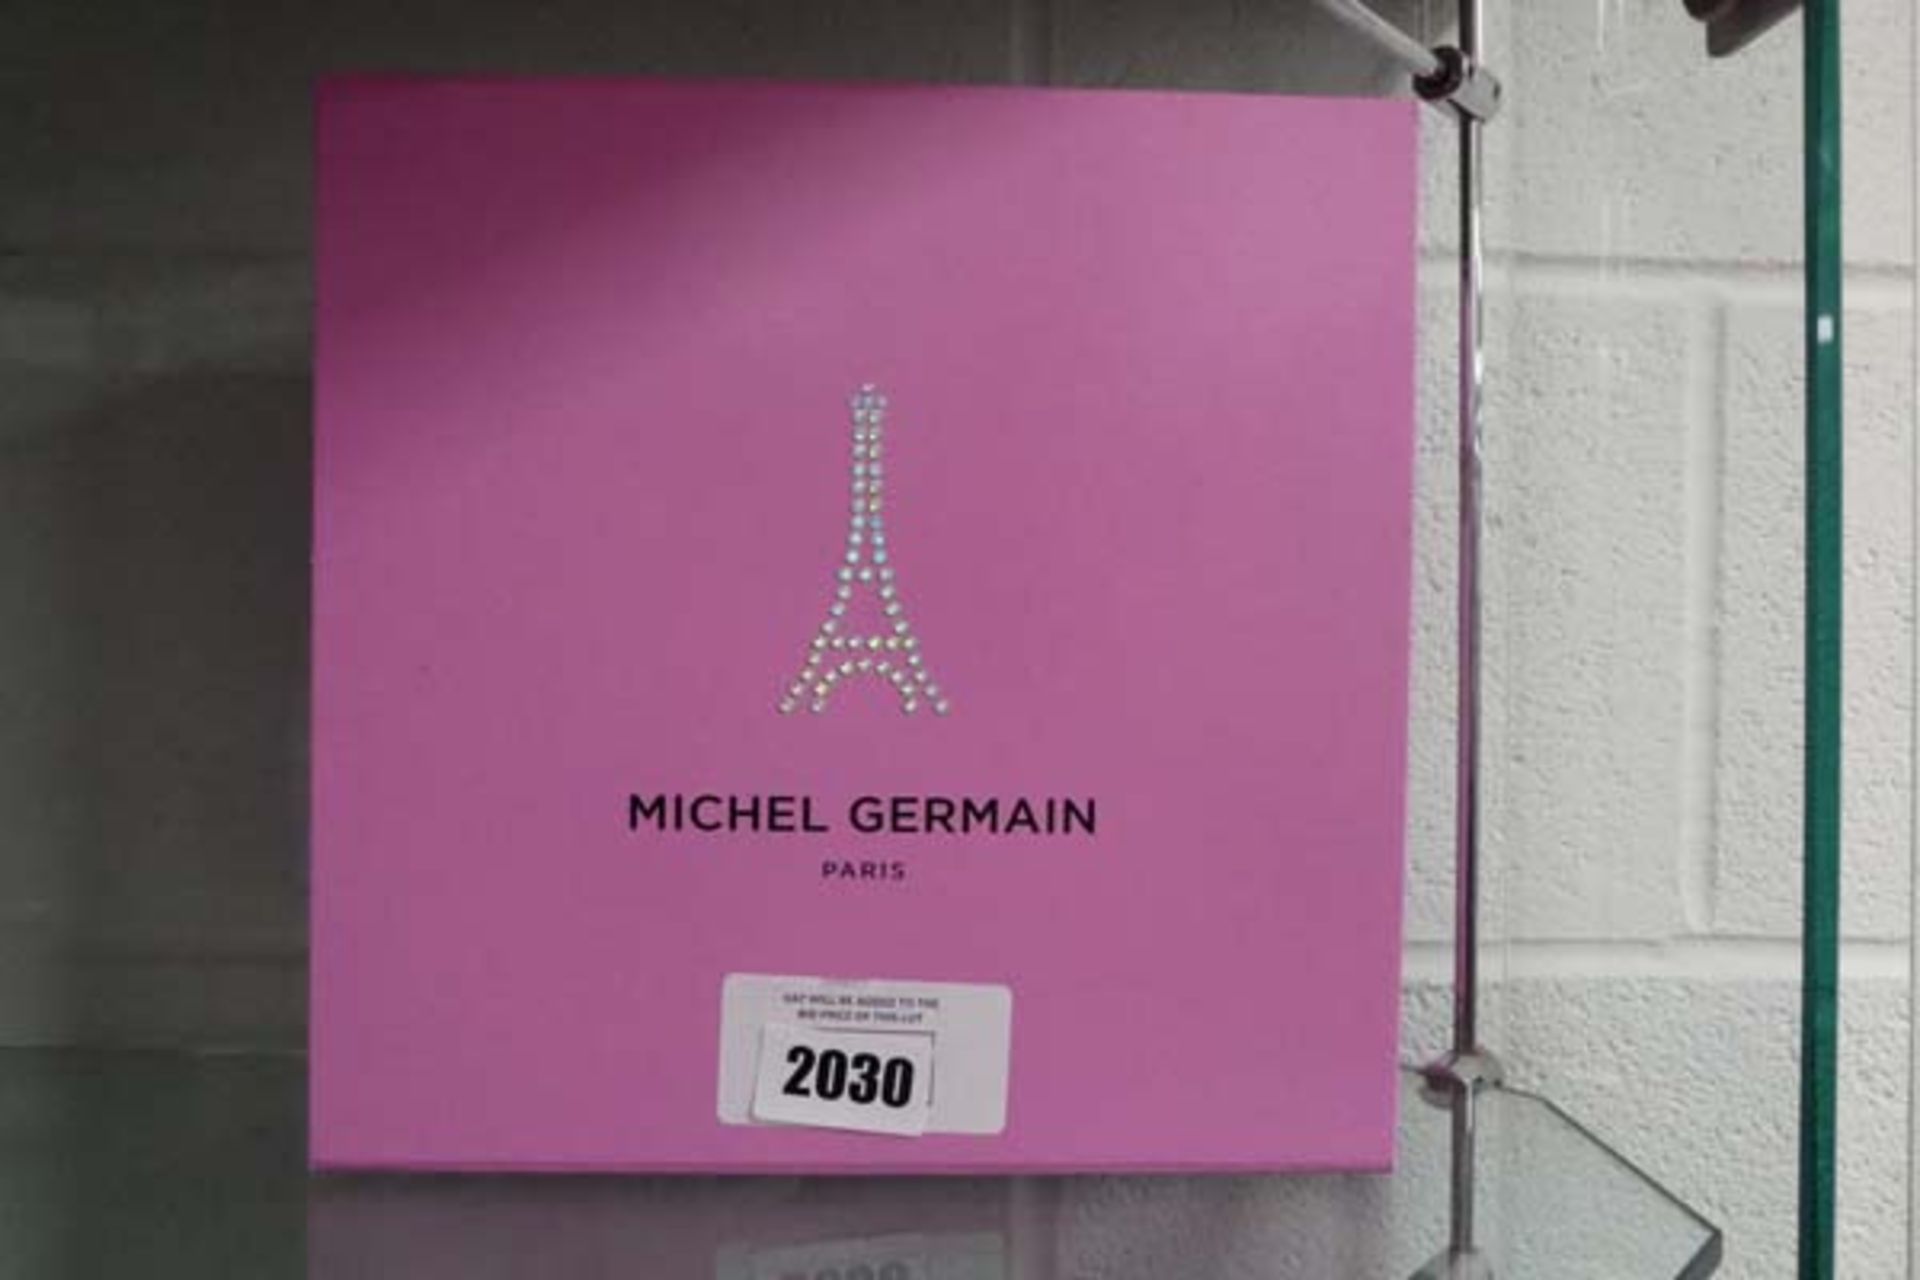 Michael Germain perfume gift set with 125ml perfume with box